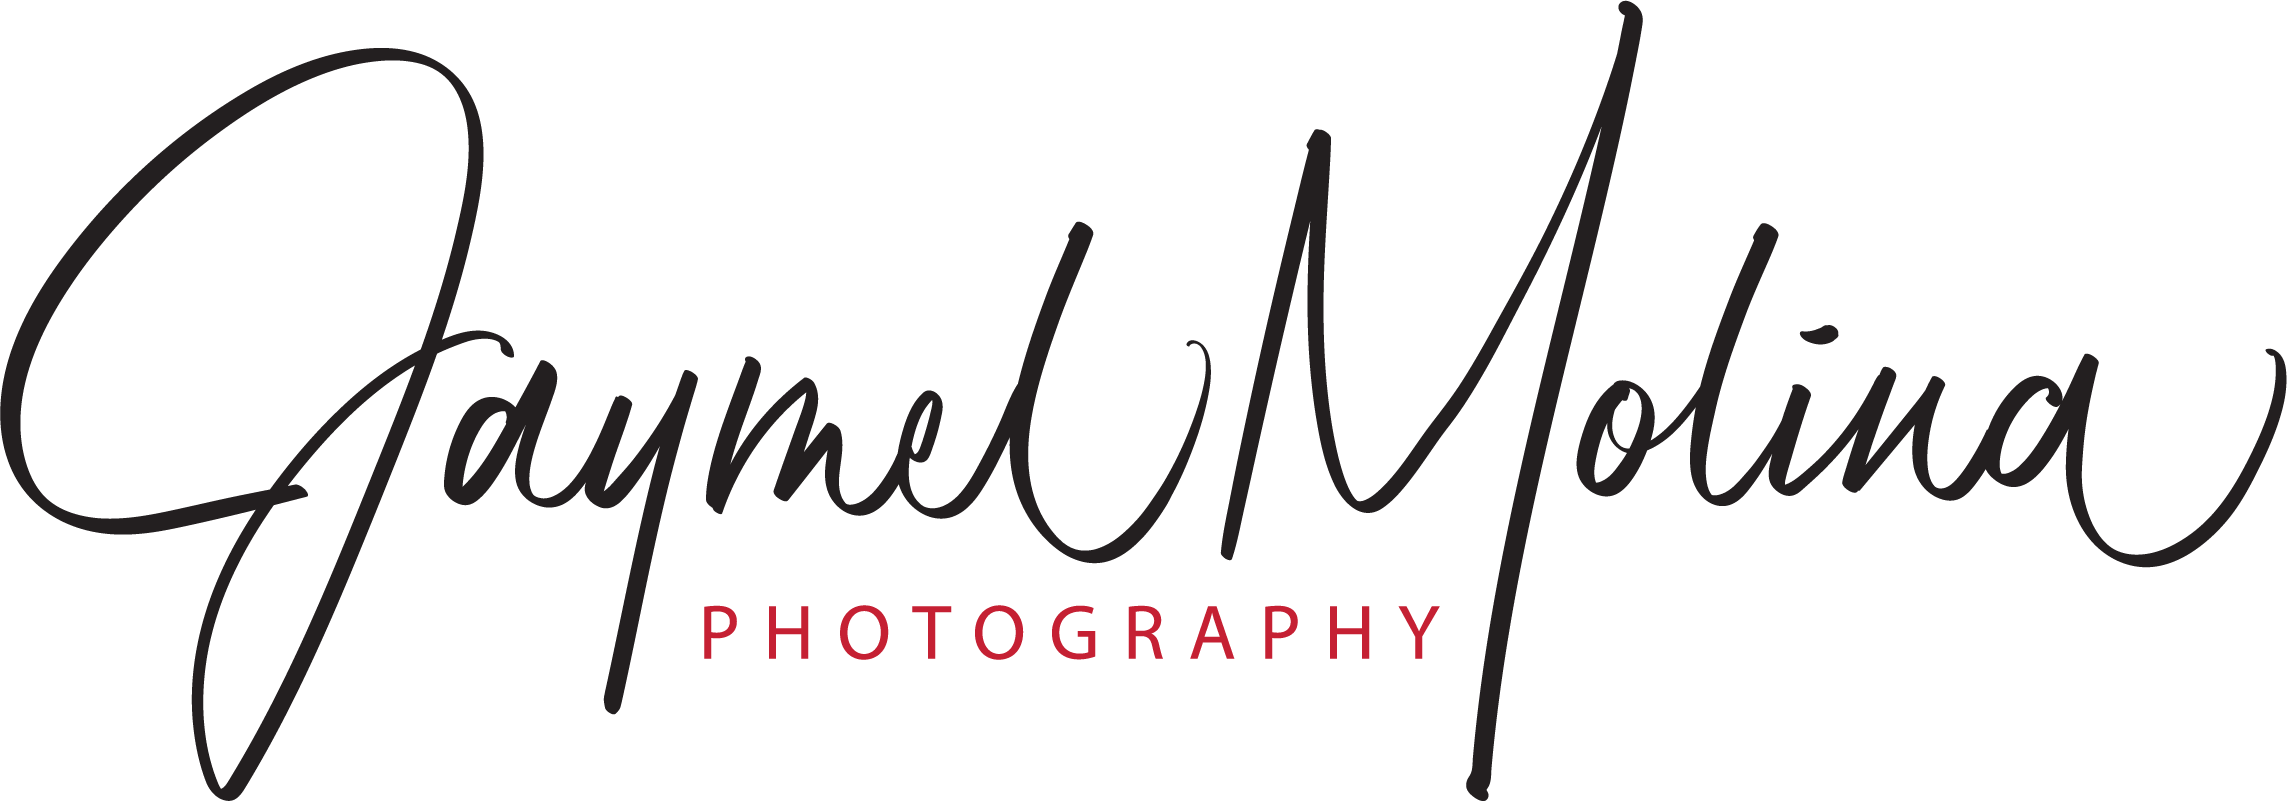 Jaymel Molina Photography | Premier Wedding Photography in Las Vegas